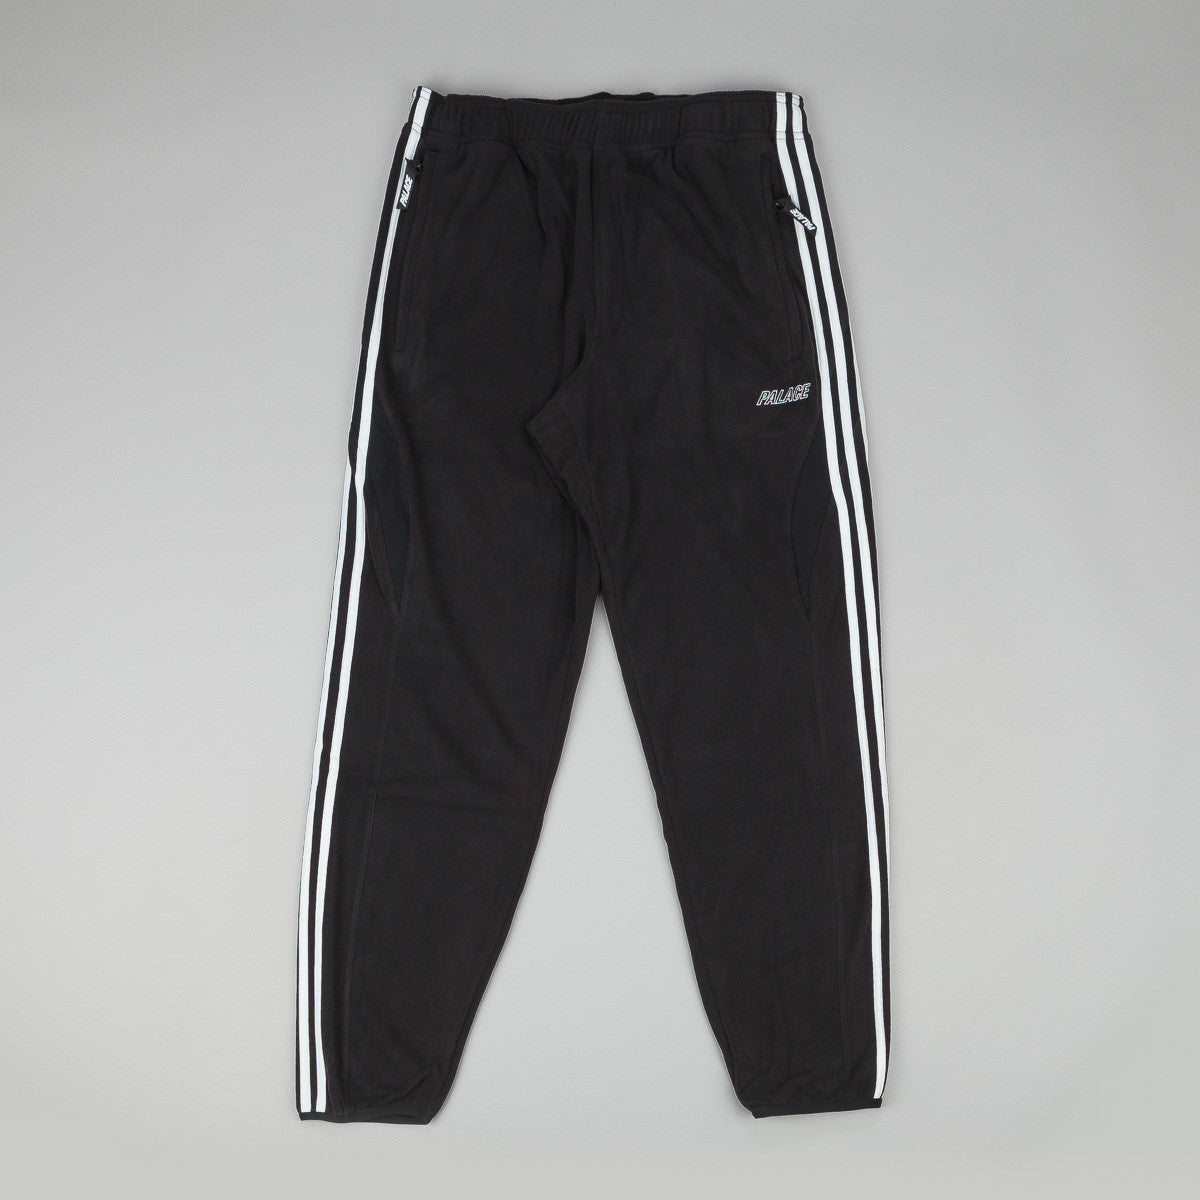 Adidas x Palace Fleece Sweatpants - Black / White | Flatspot